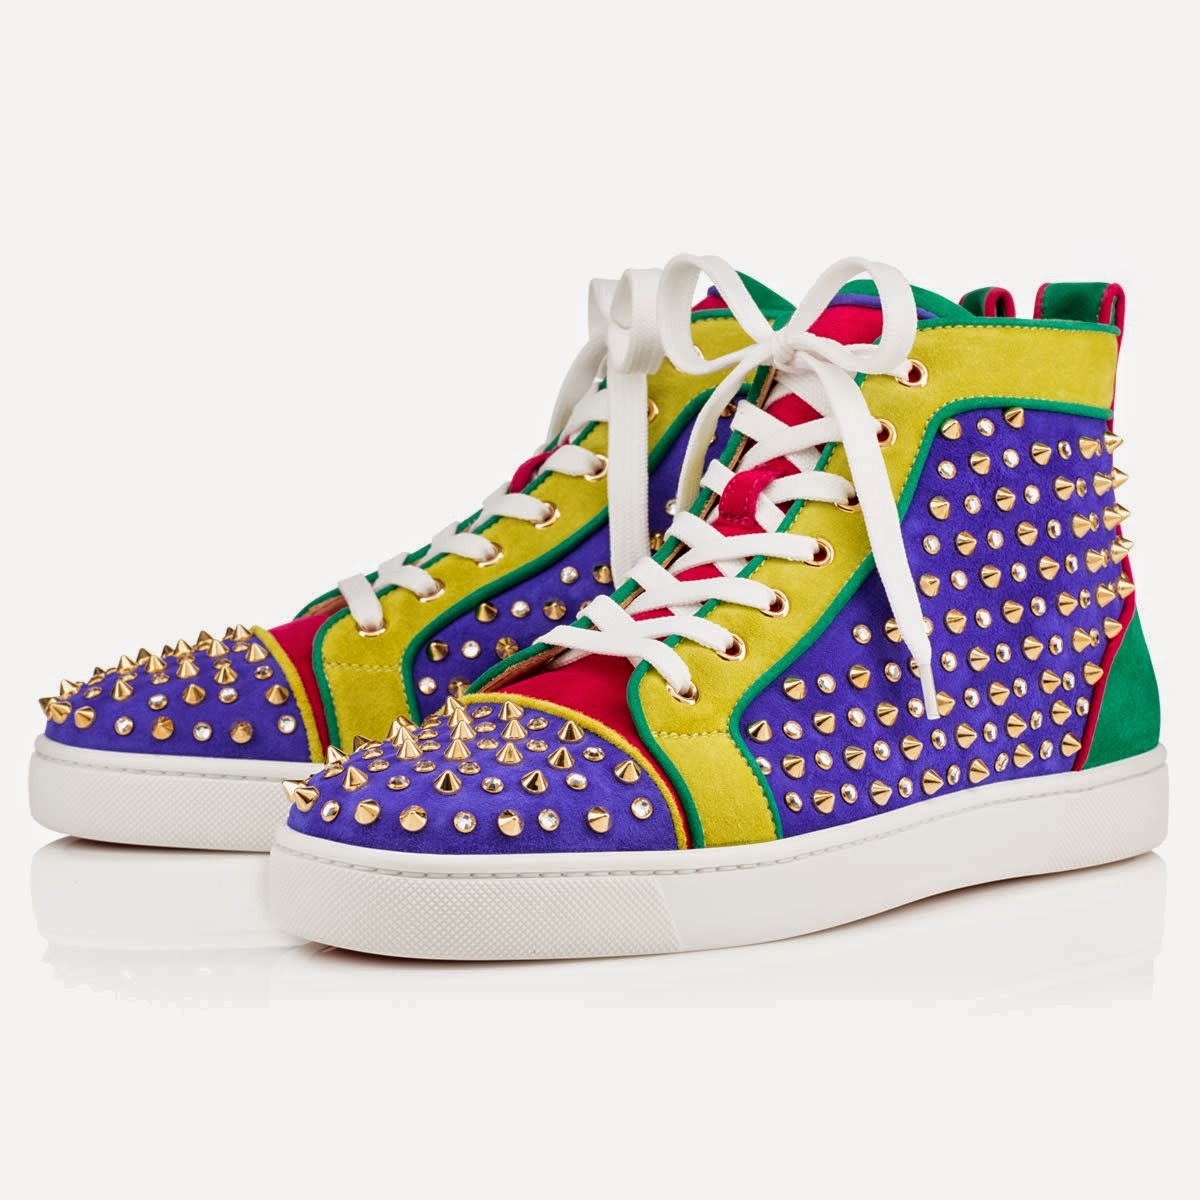 DIY-zapatillas-tunear-customizar-CHRISTIAN-LOUBOUTIN-zapatos-pinchos-esmaltes-pinta uñas-colores-2015